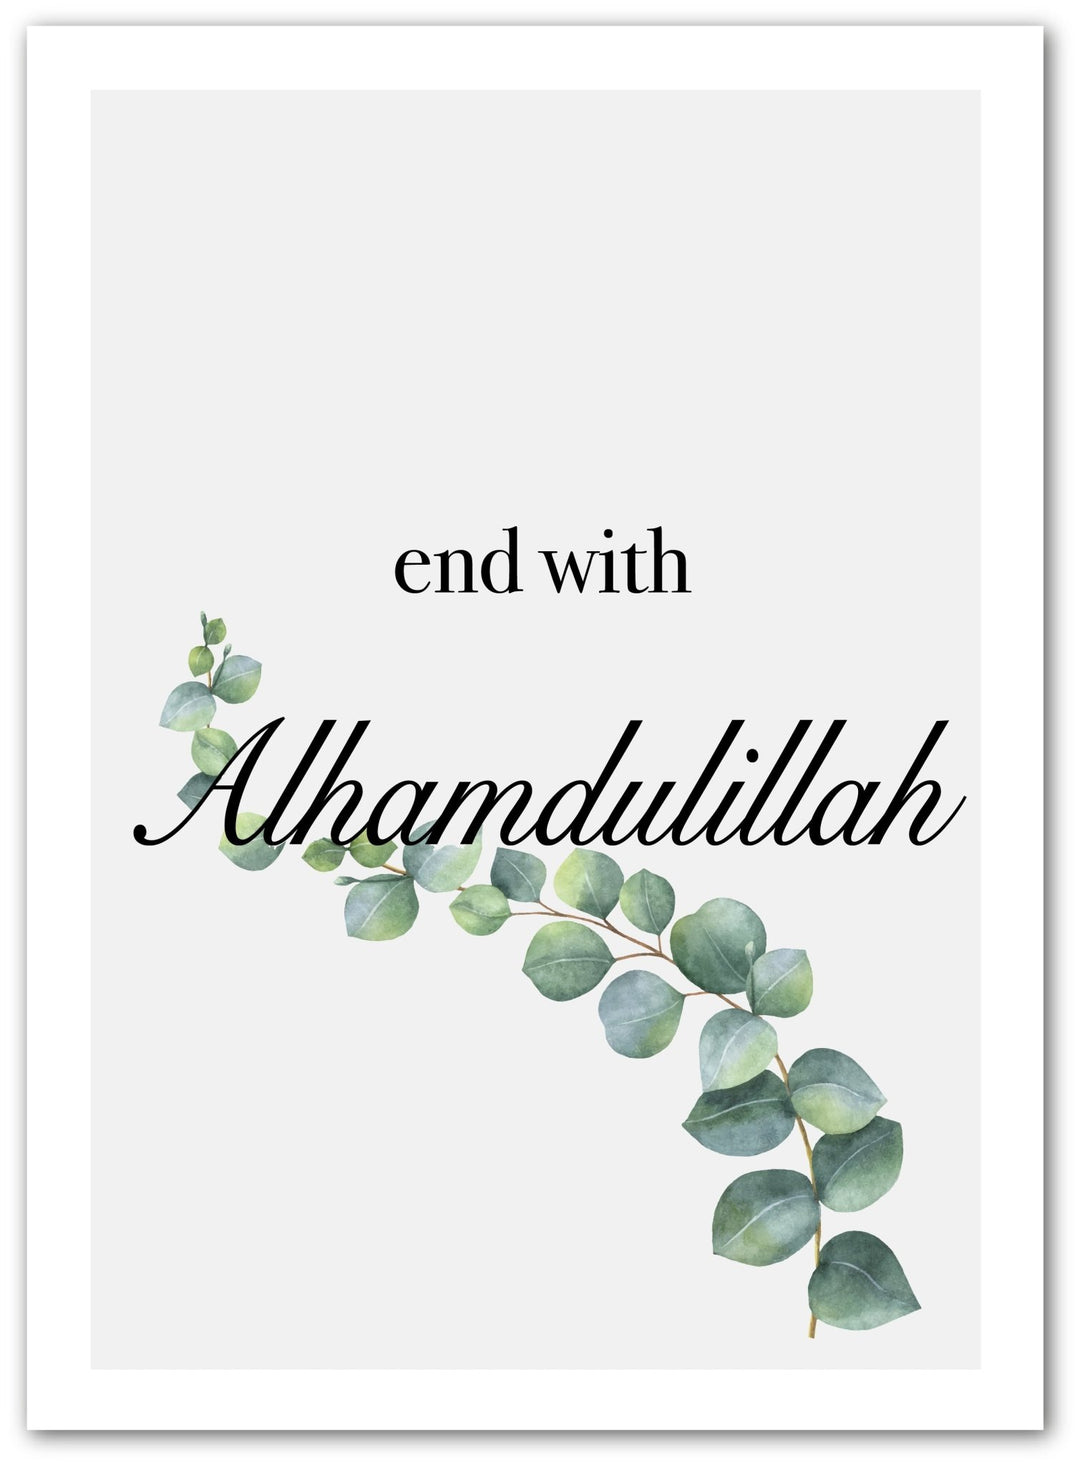 End with Alhamdulillah - grün - Beautiful Wall